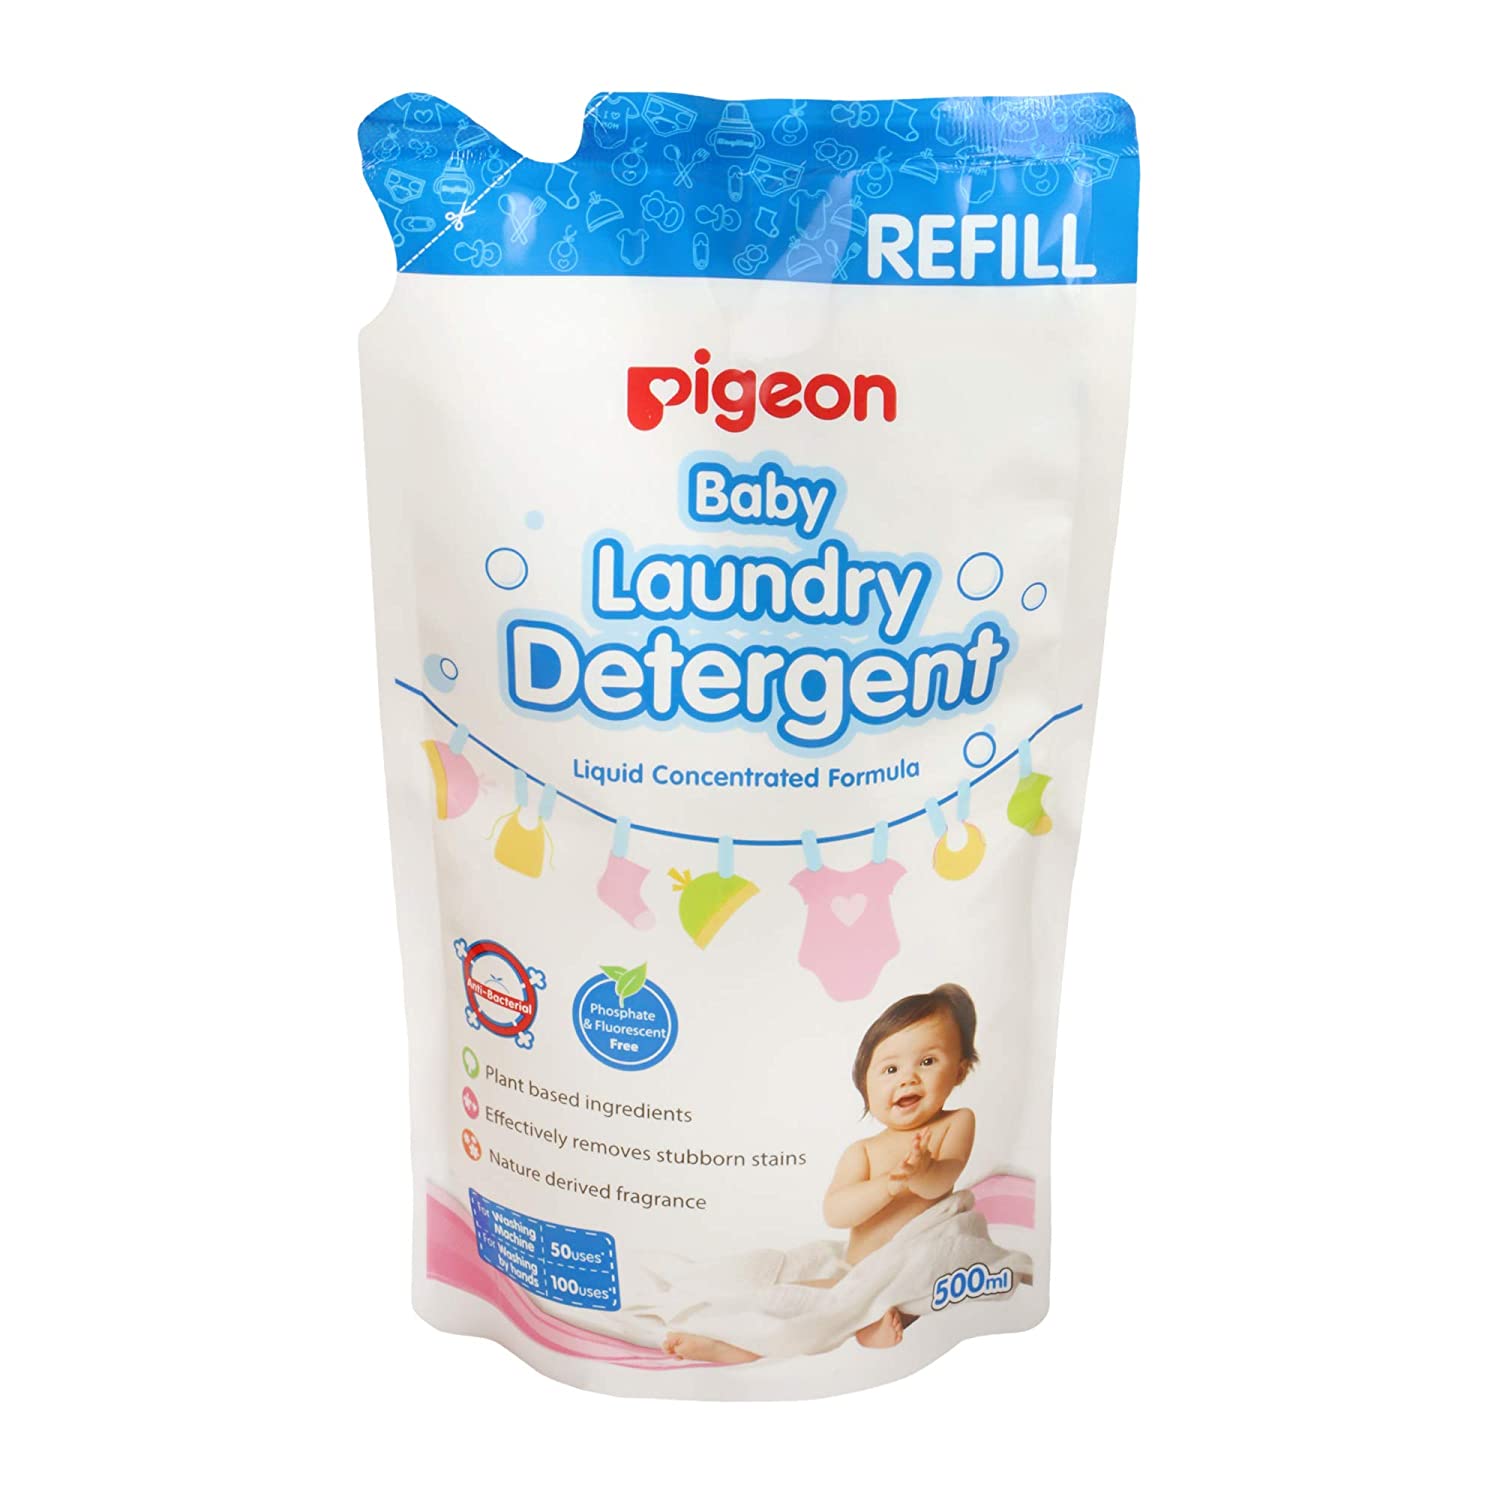 Pigeon Laundry Detergent (Liquid) 500ml (Refill)